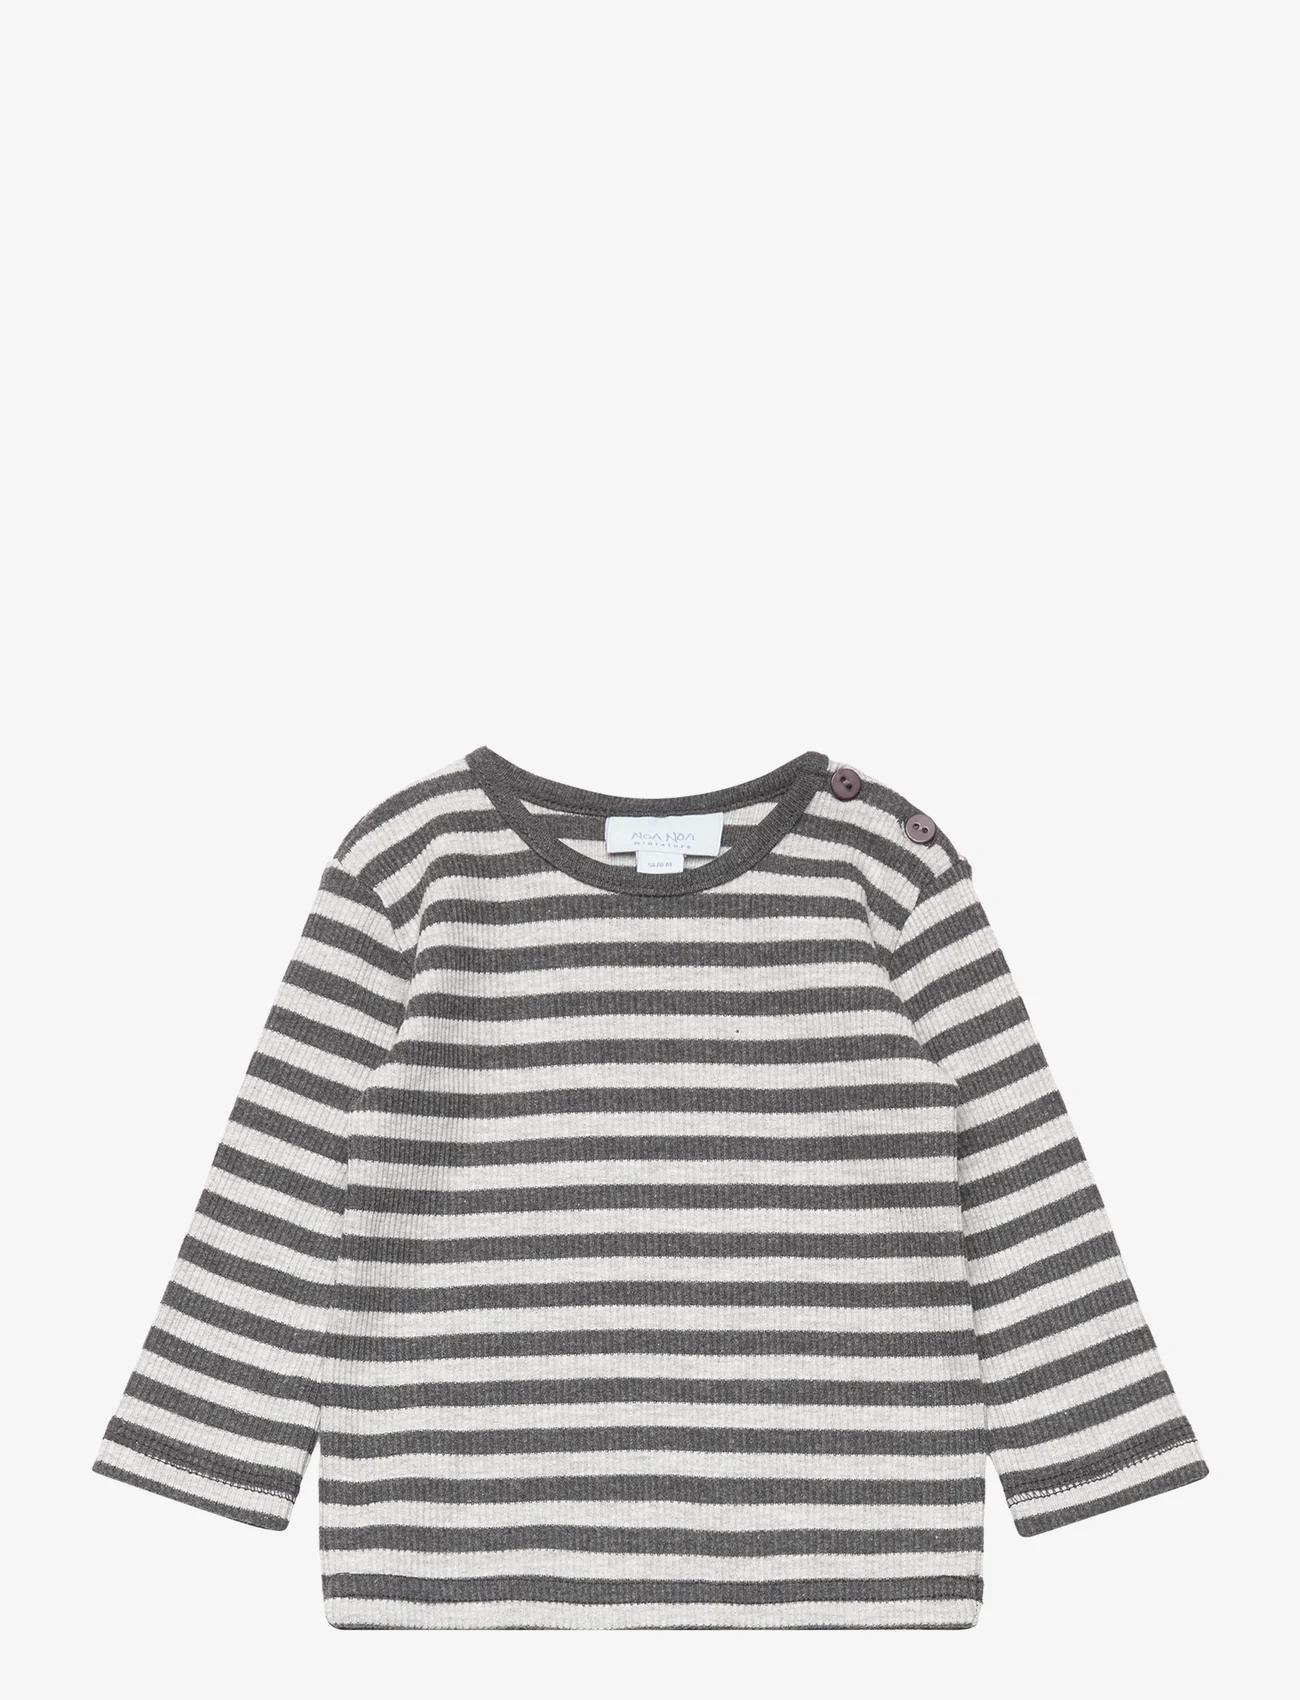 Noa Noa miniature - T-shirt - langærmede t-shirts - light/dark grey melange - 0